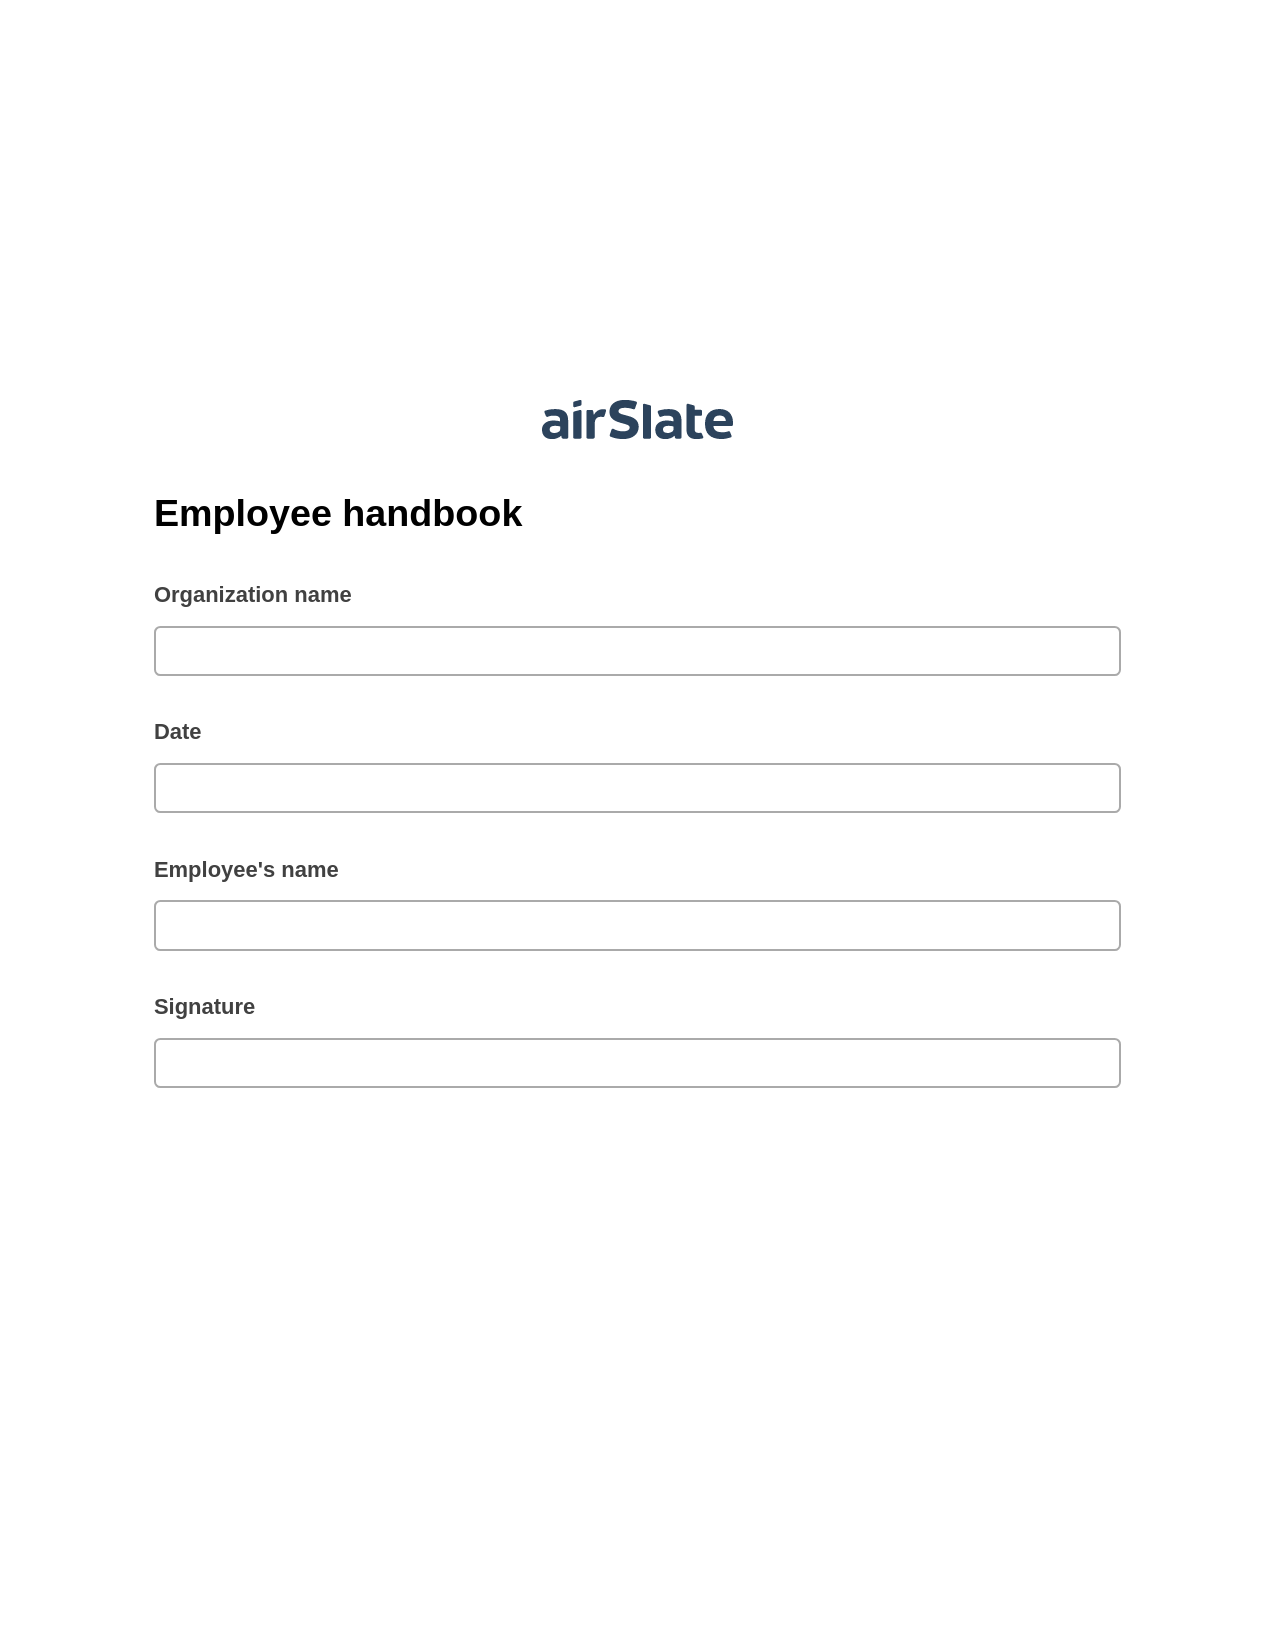 Multirole Employee handbook Pre-fill Document Bot, Slack Notification Bot, Export to Google Sheet Bot